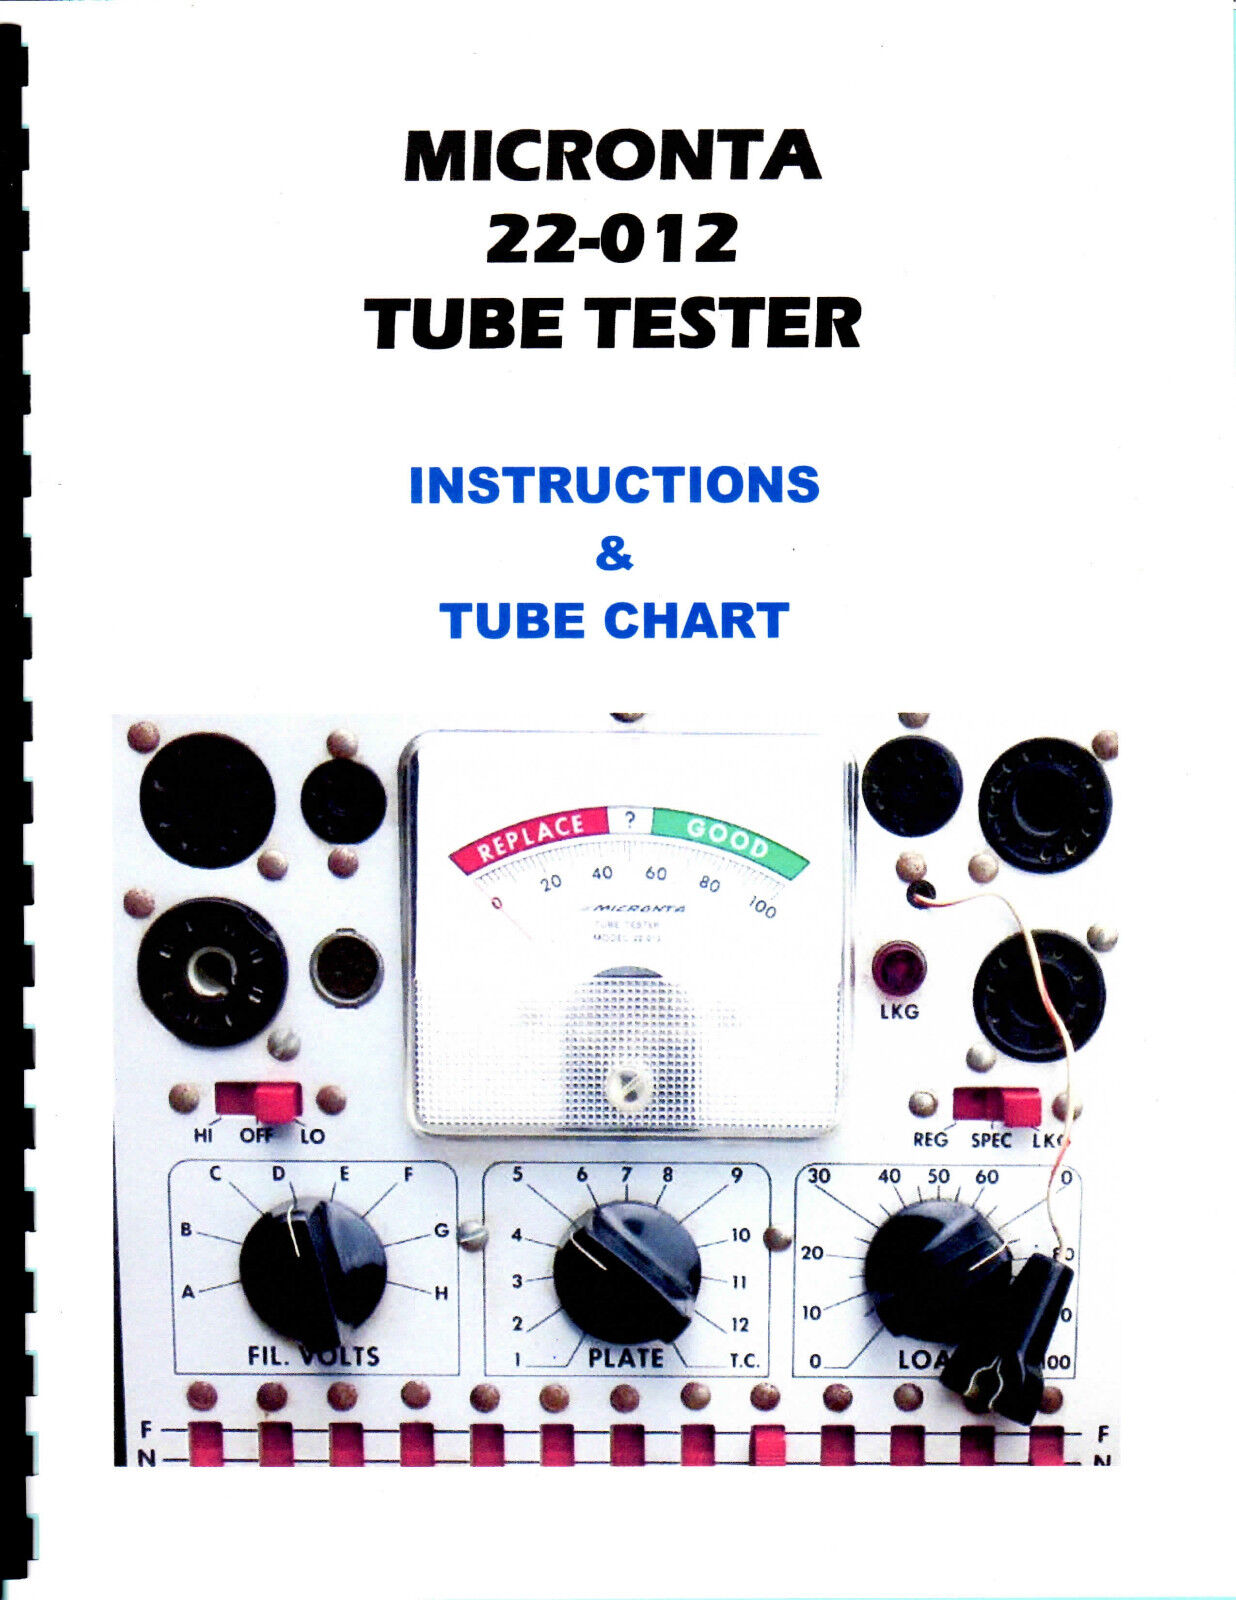 Manual Charts Micronta 22-012 T-31 Tube Tester Radio Shack Realistic New Copy